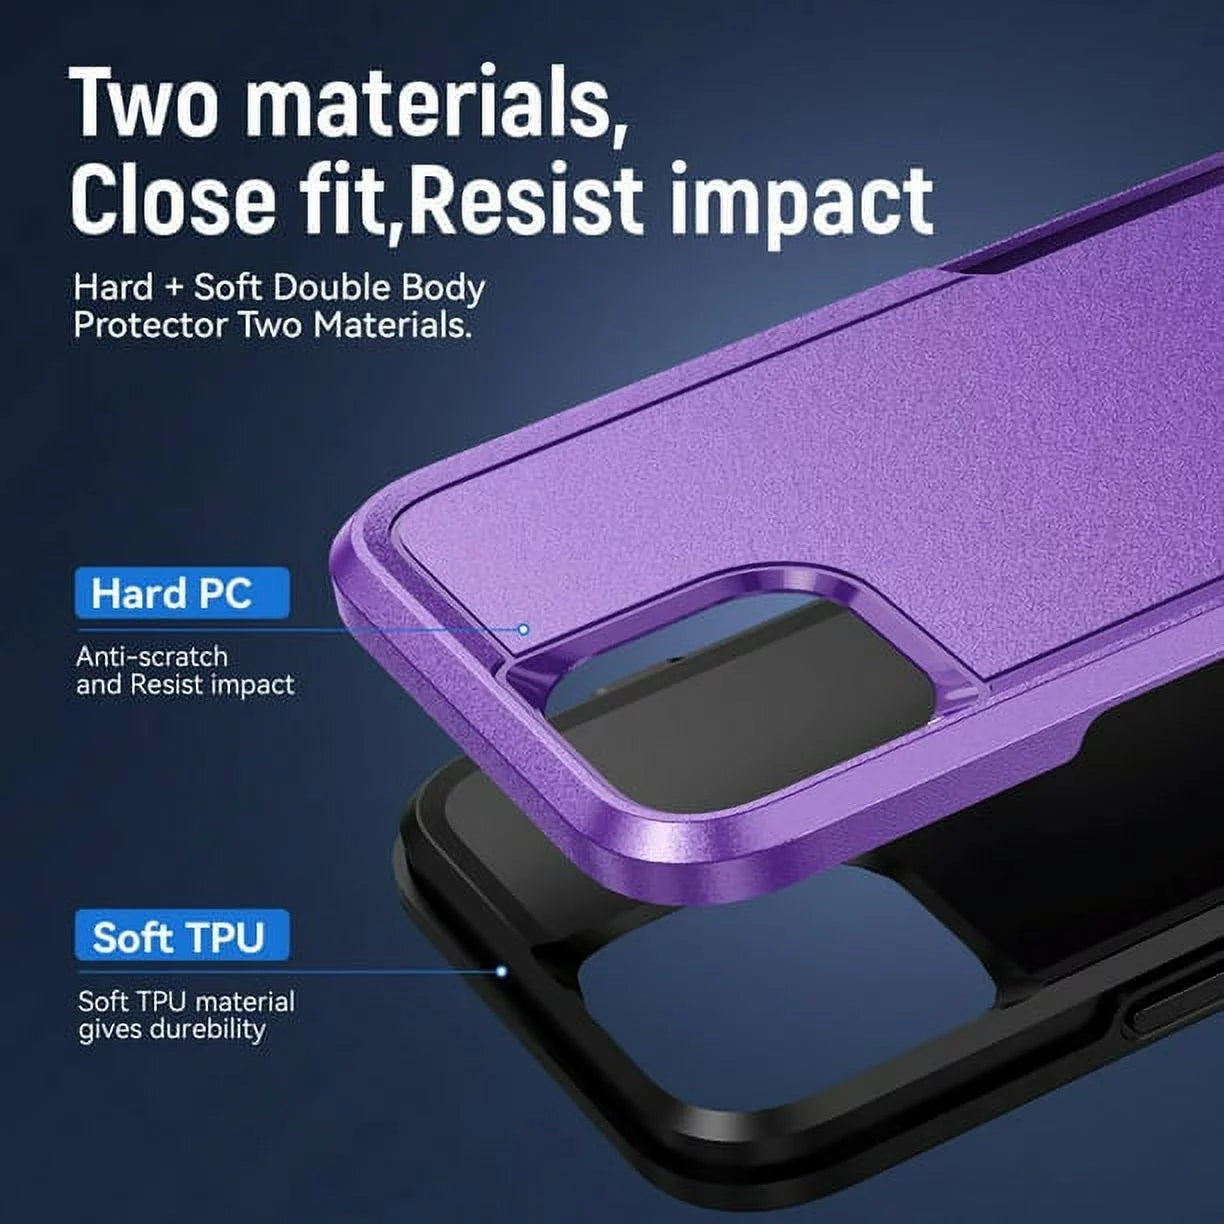 iP 11 Pro Max Sleek Case